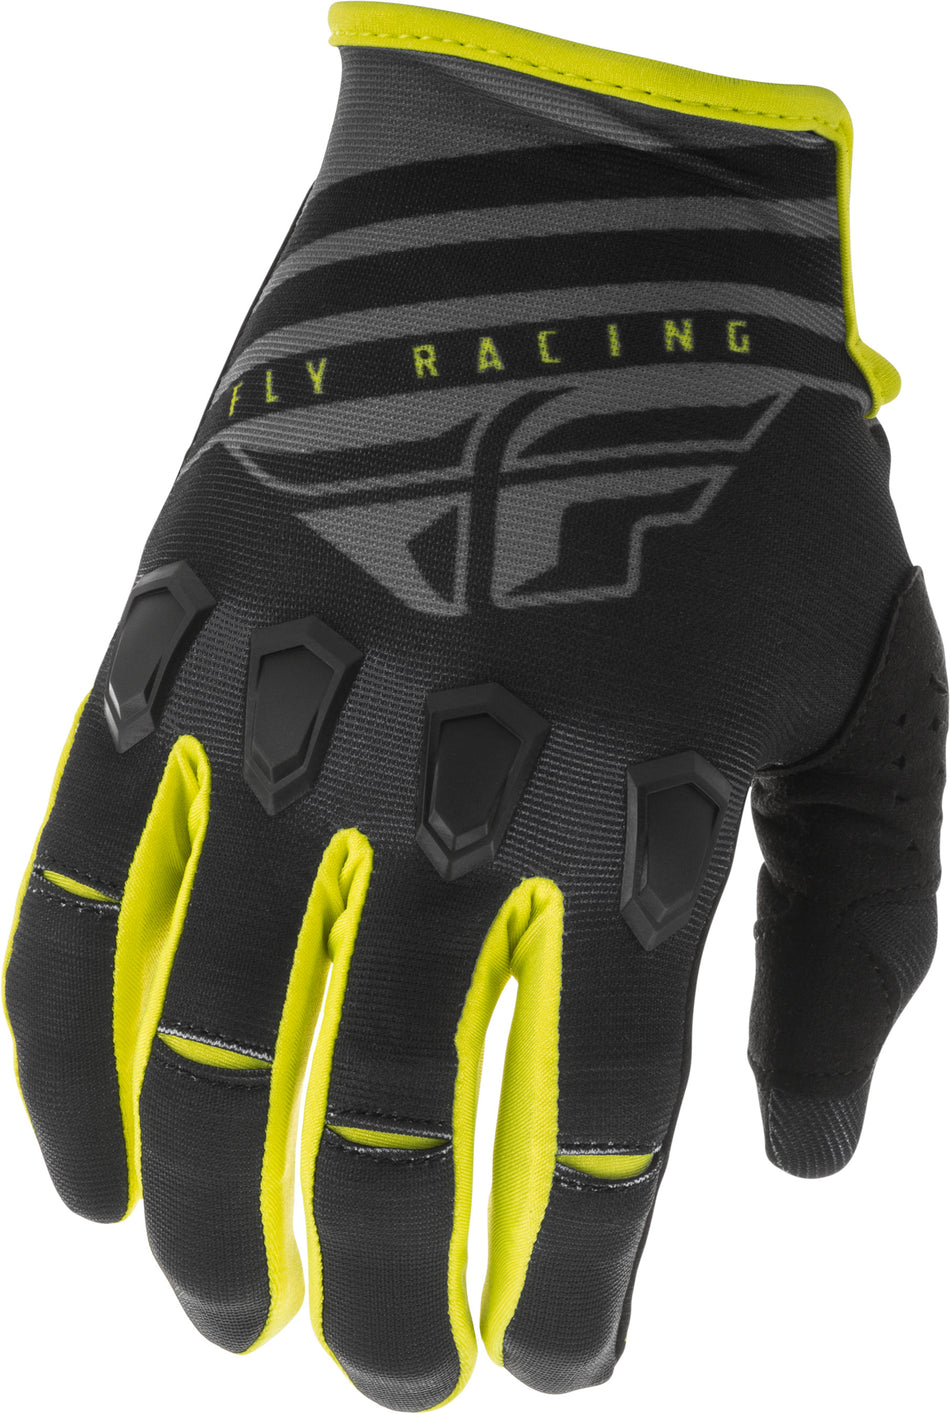 FLY RACING Kinetic K220 Gloves Black/Grey/Hi-Vis Sz 04 373-51504